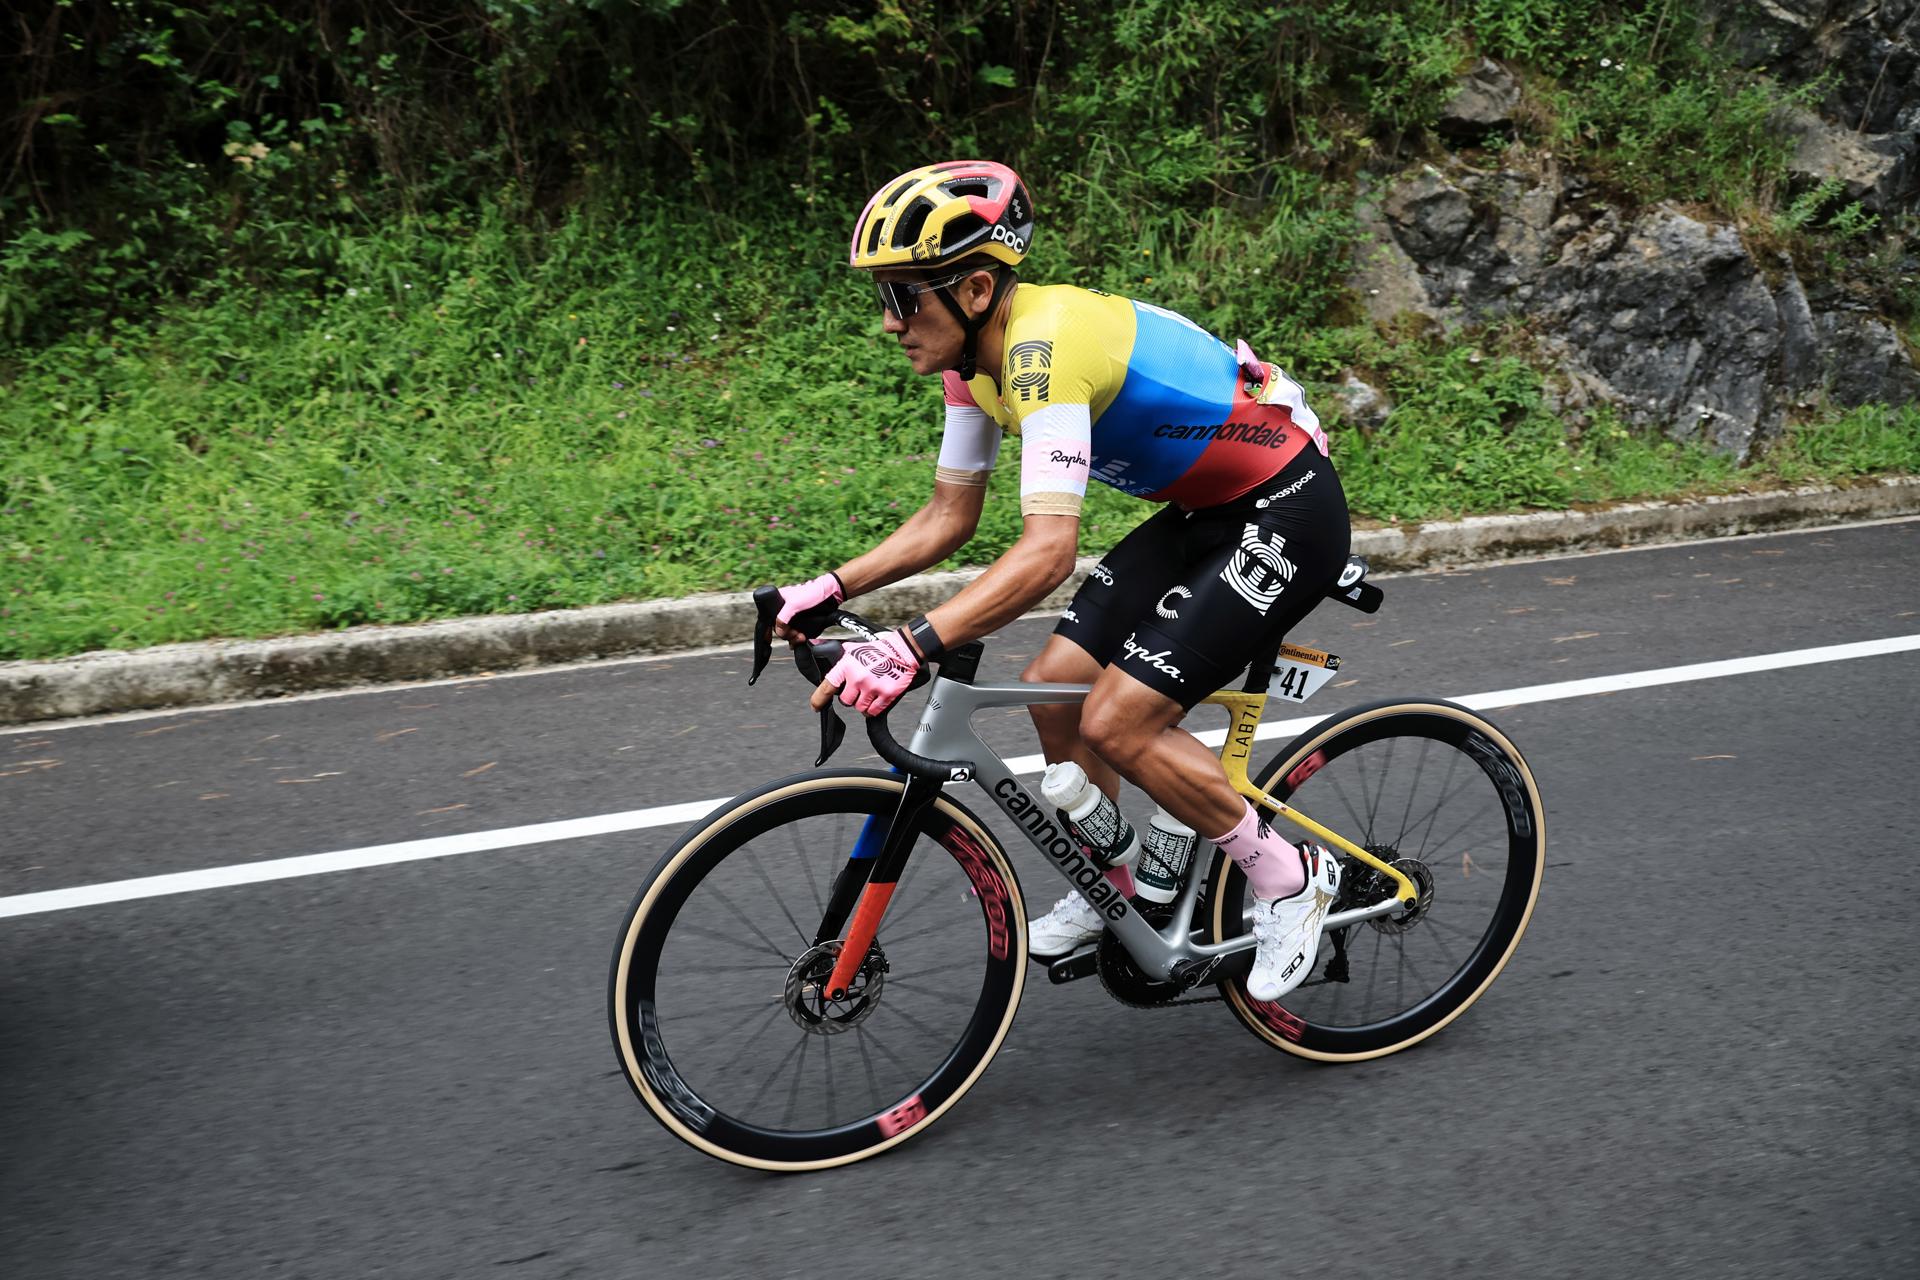 Richard Carapaz sufrió una caída en la primera etapa del Tour de Francia. Foto: EFE.